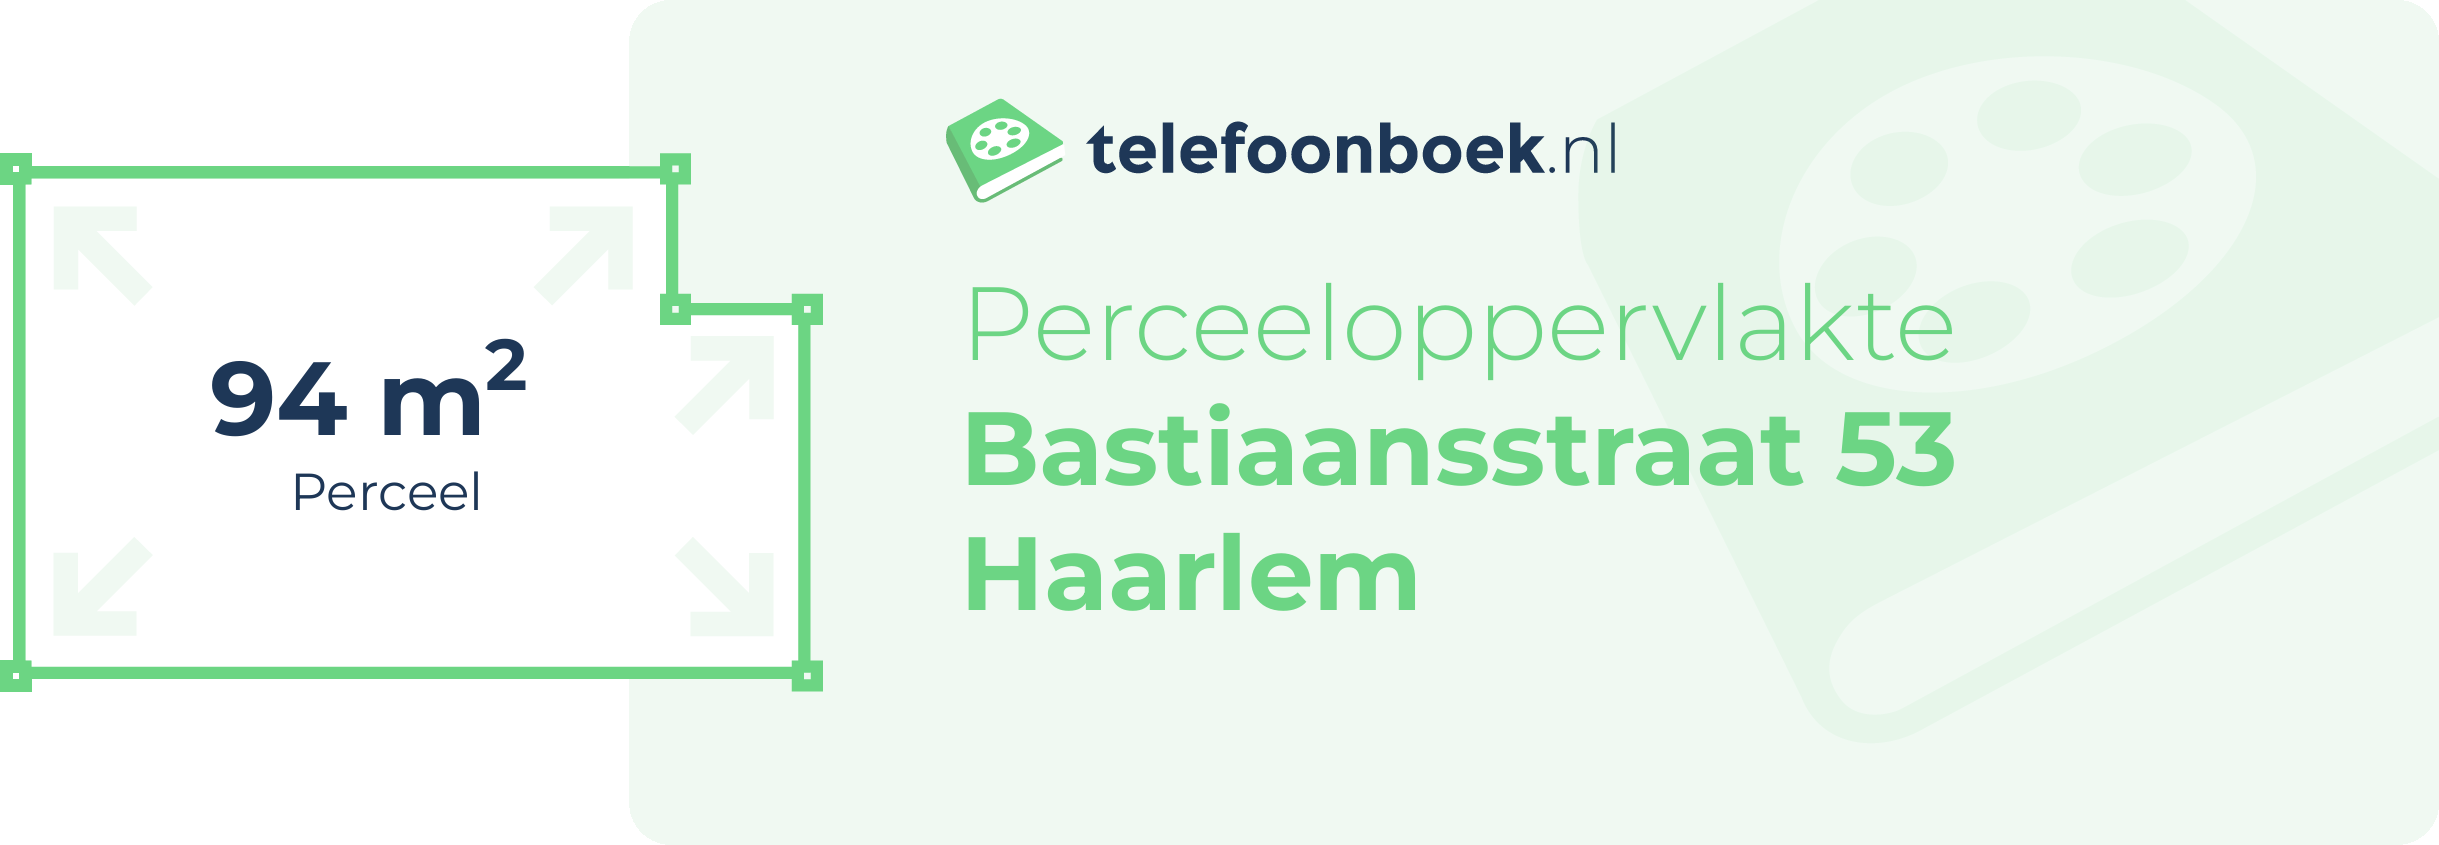 Perceeloppervlakte Bastiaansstraat 53 Haarlem